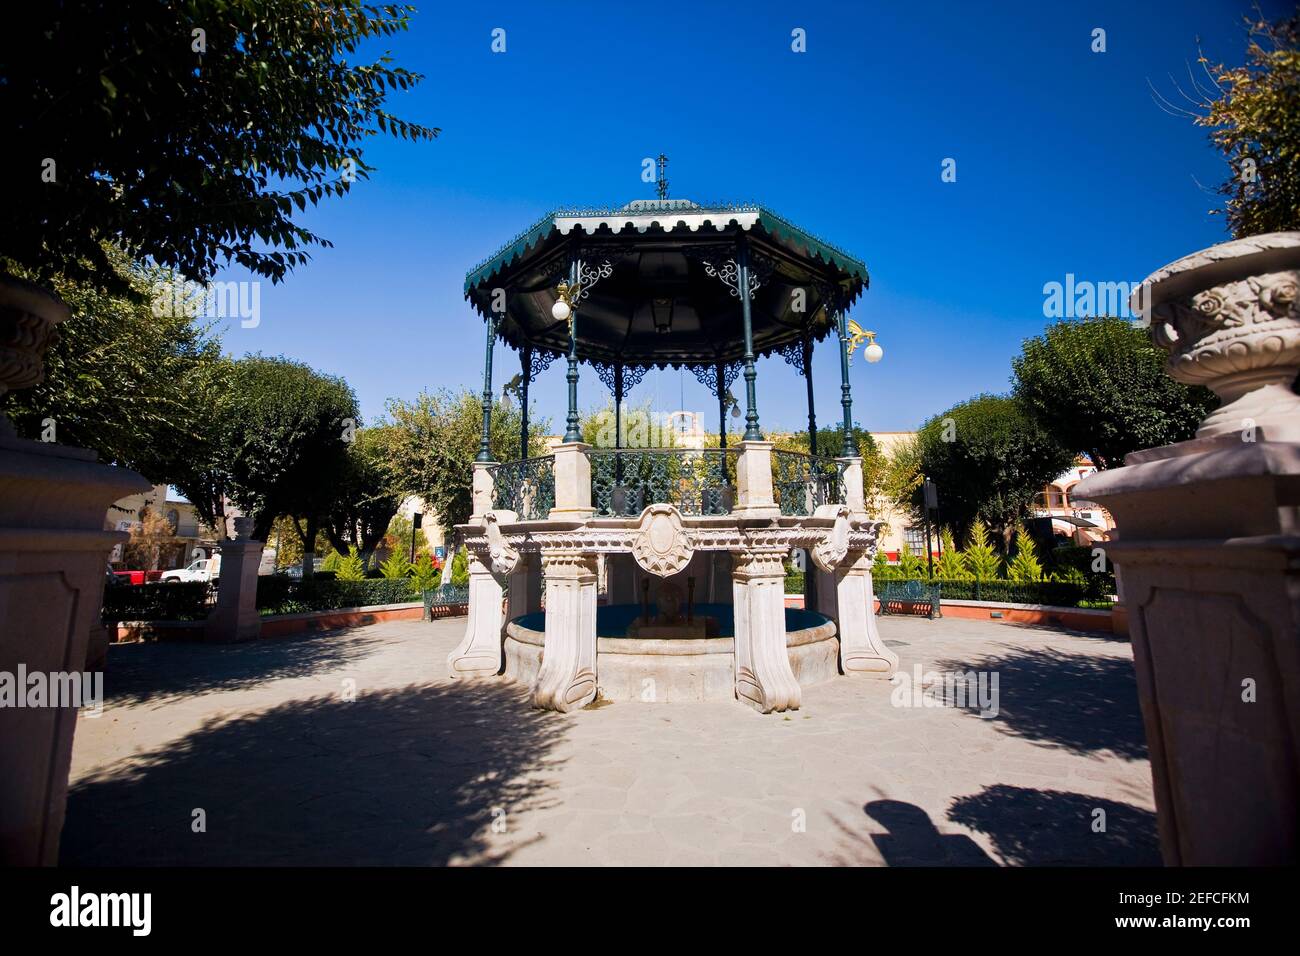 Pavillon in einem Garten, Sombrerete, Zacatecas Staat, Mexiko Stockfoto